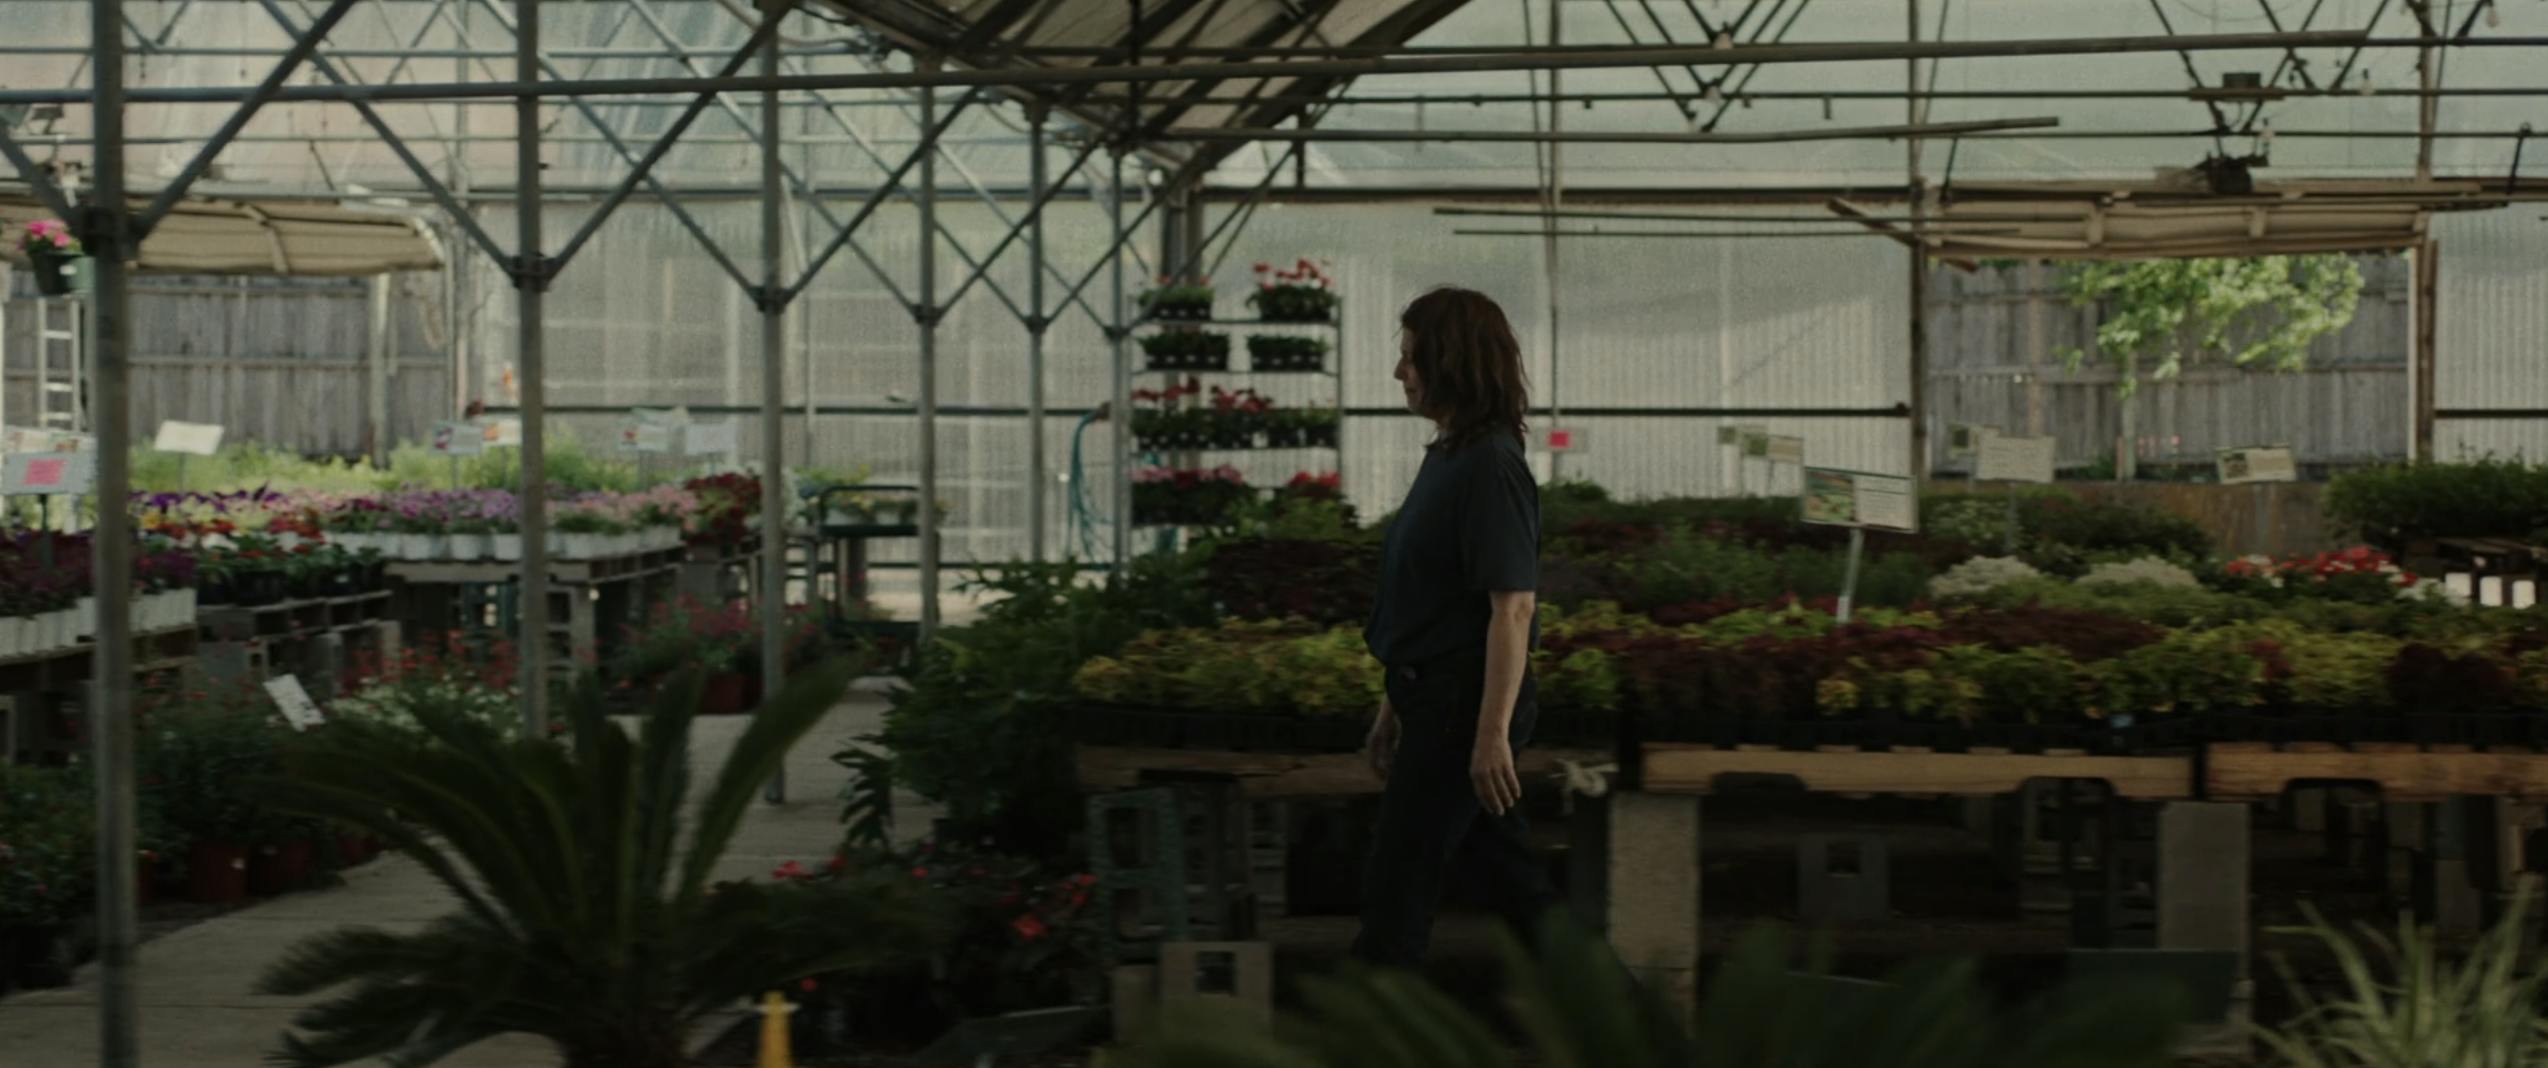 A woman walks through a plant nursery greenhouse